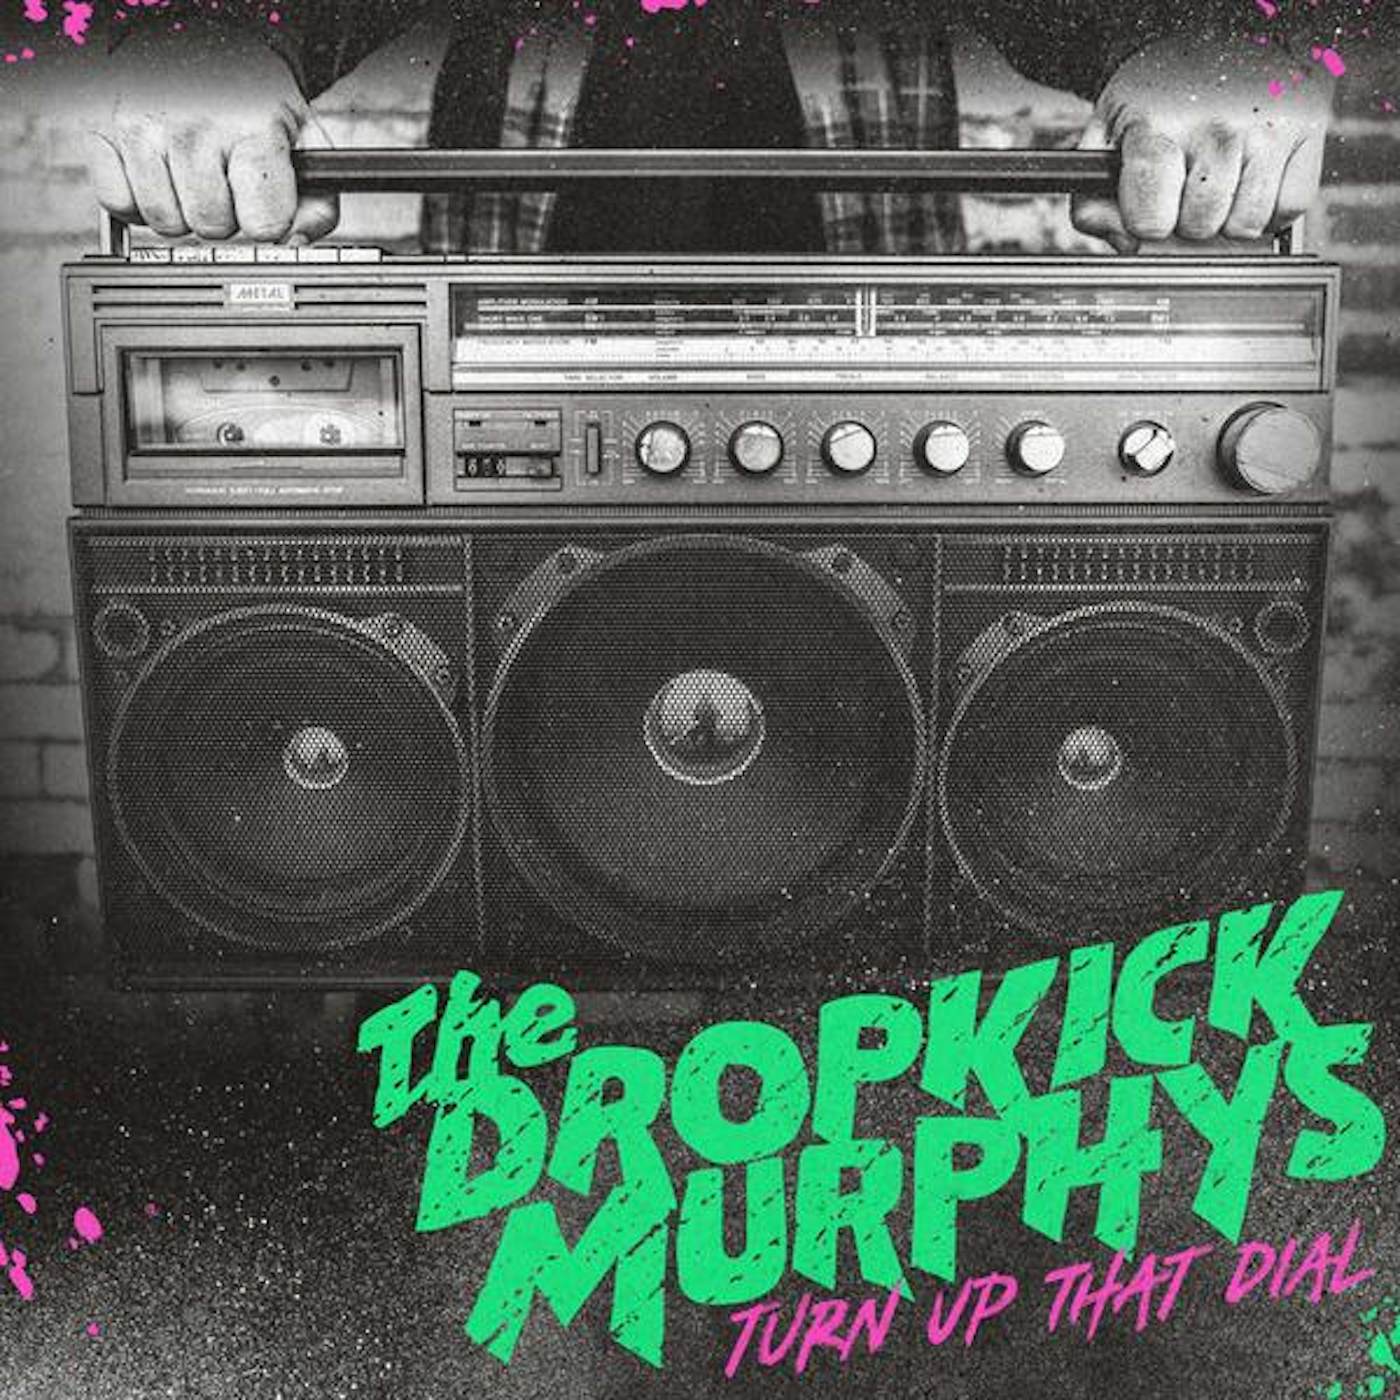 Dropkick Murphys TURN UP THAT DIAL (TRANSPARENT BLACK/SMOKE VINYL) Vinyl Record